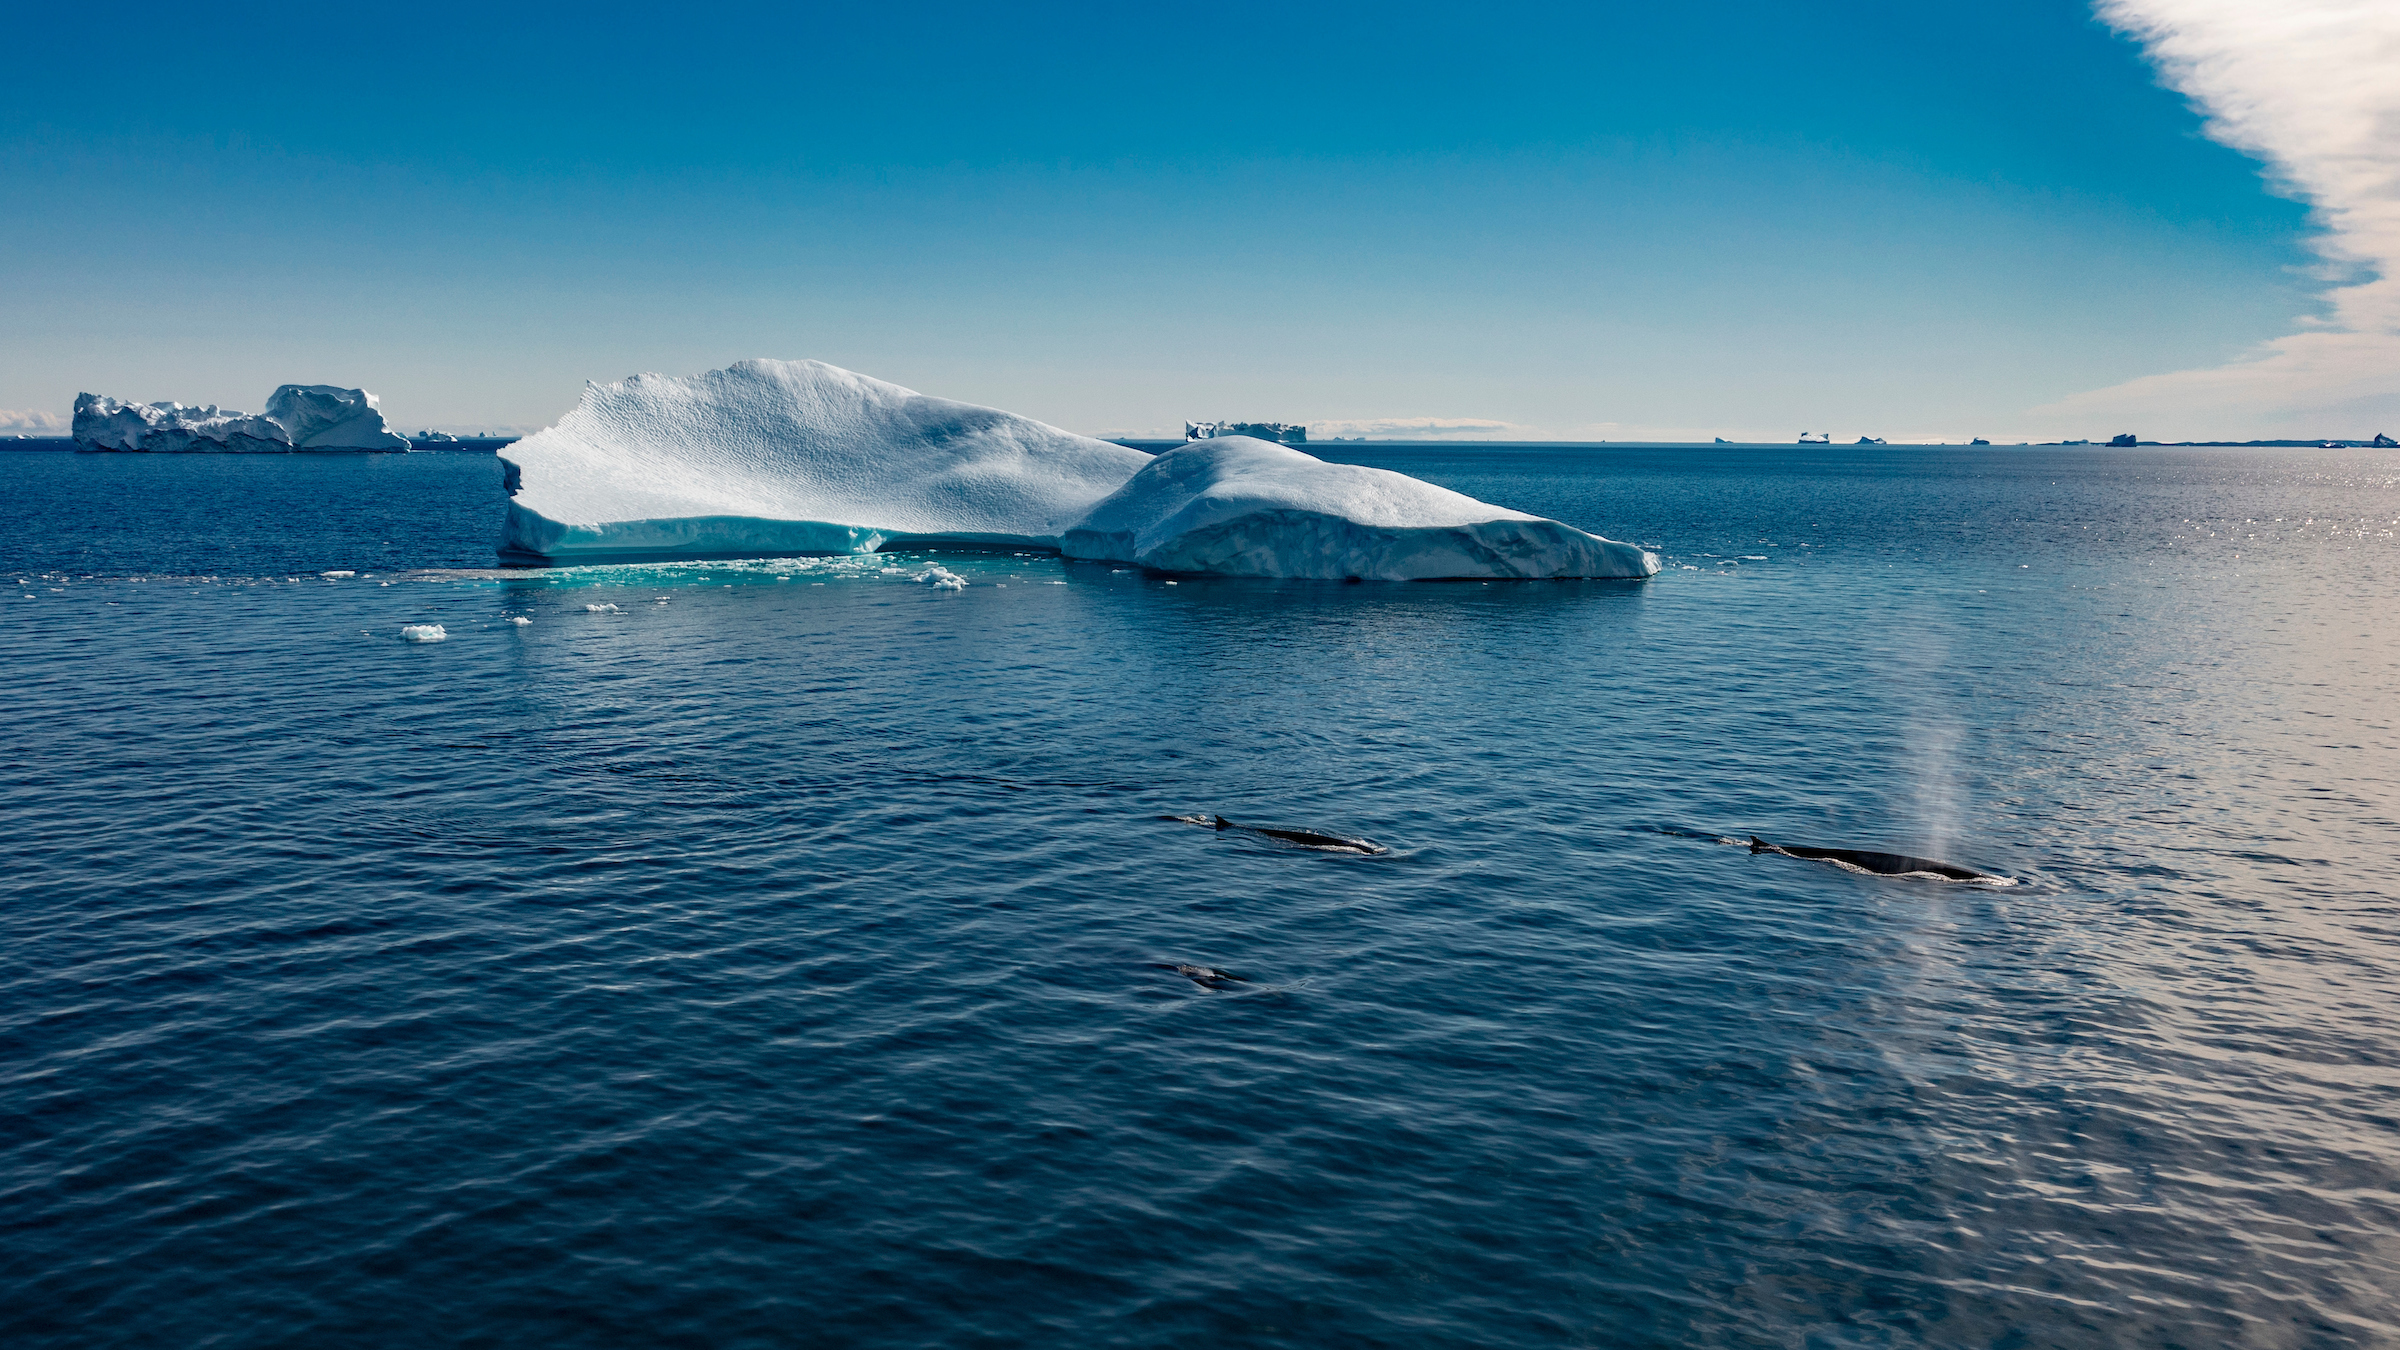 Whales swimming near an iceberg